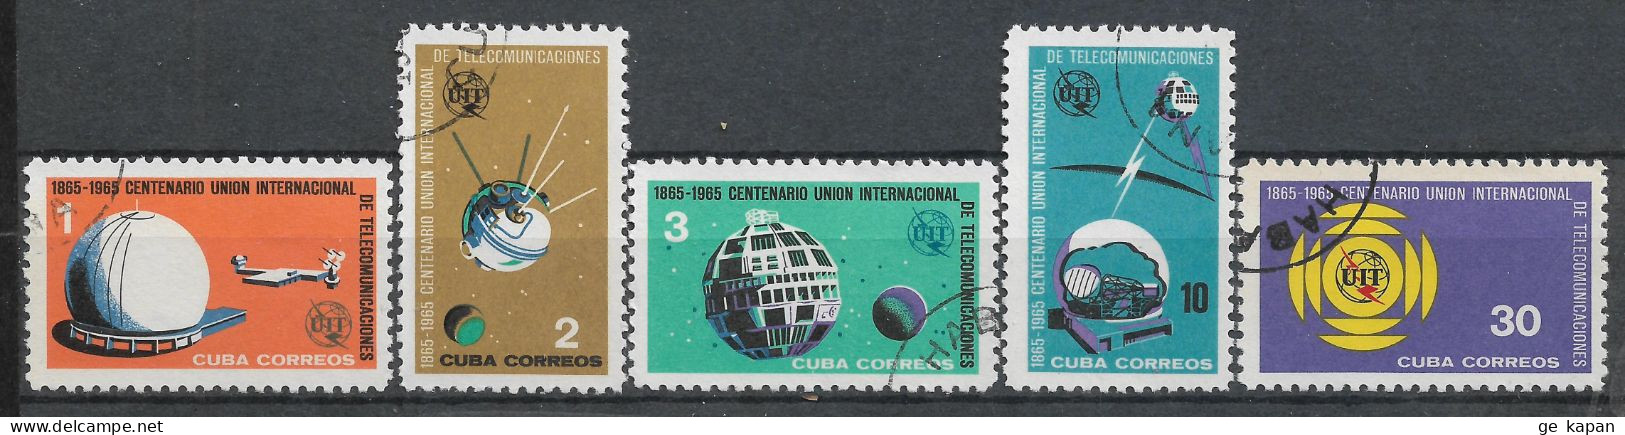 1965 CUBA COMPLETE SET OF 5 USED STAMPS (Michel # 1026-1030) CV €2.30 - Usados